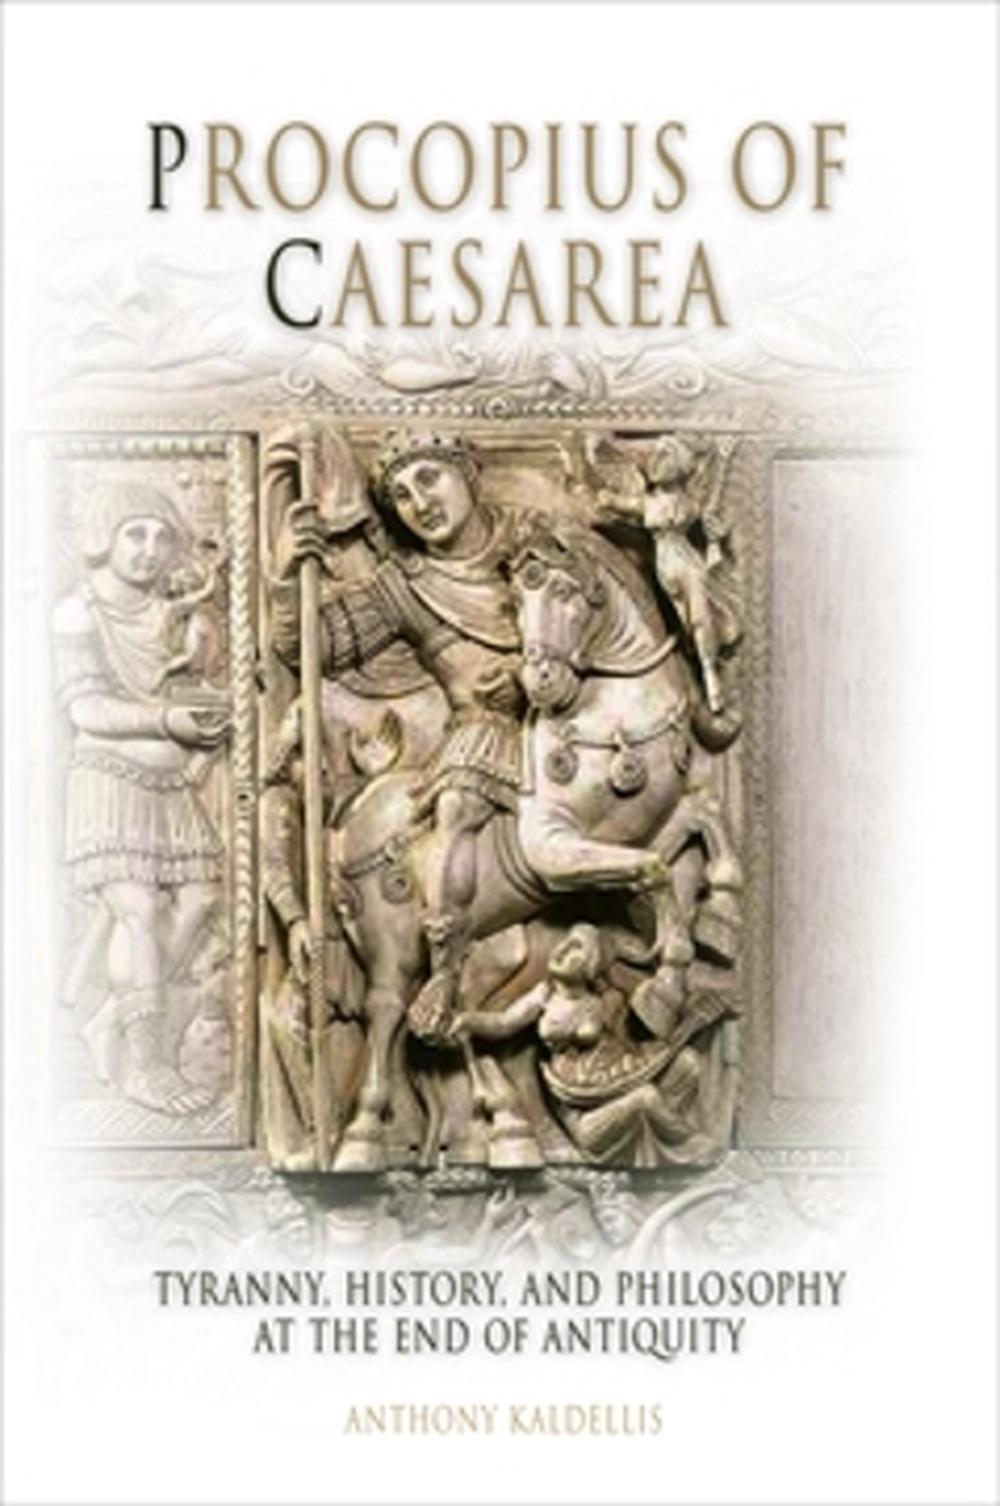 procopius of caesarea the secret history